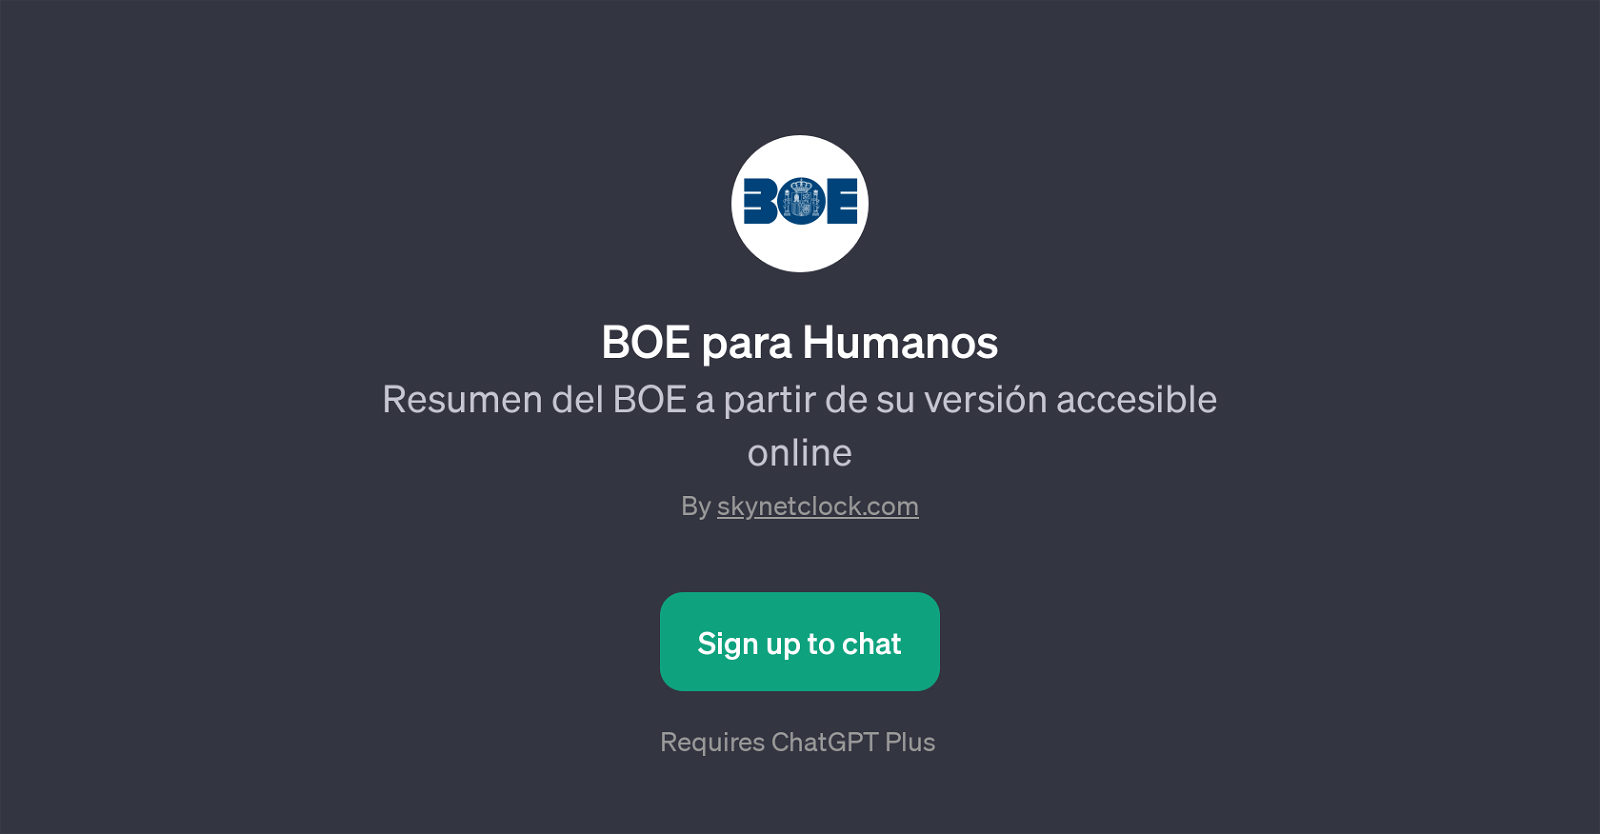 BOE para Humanos website